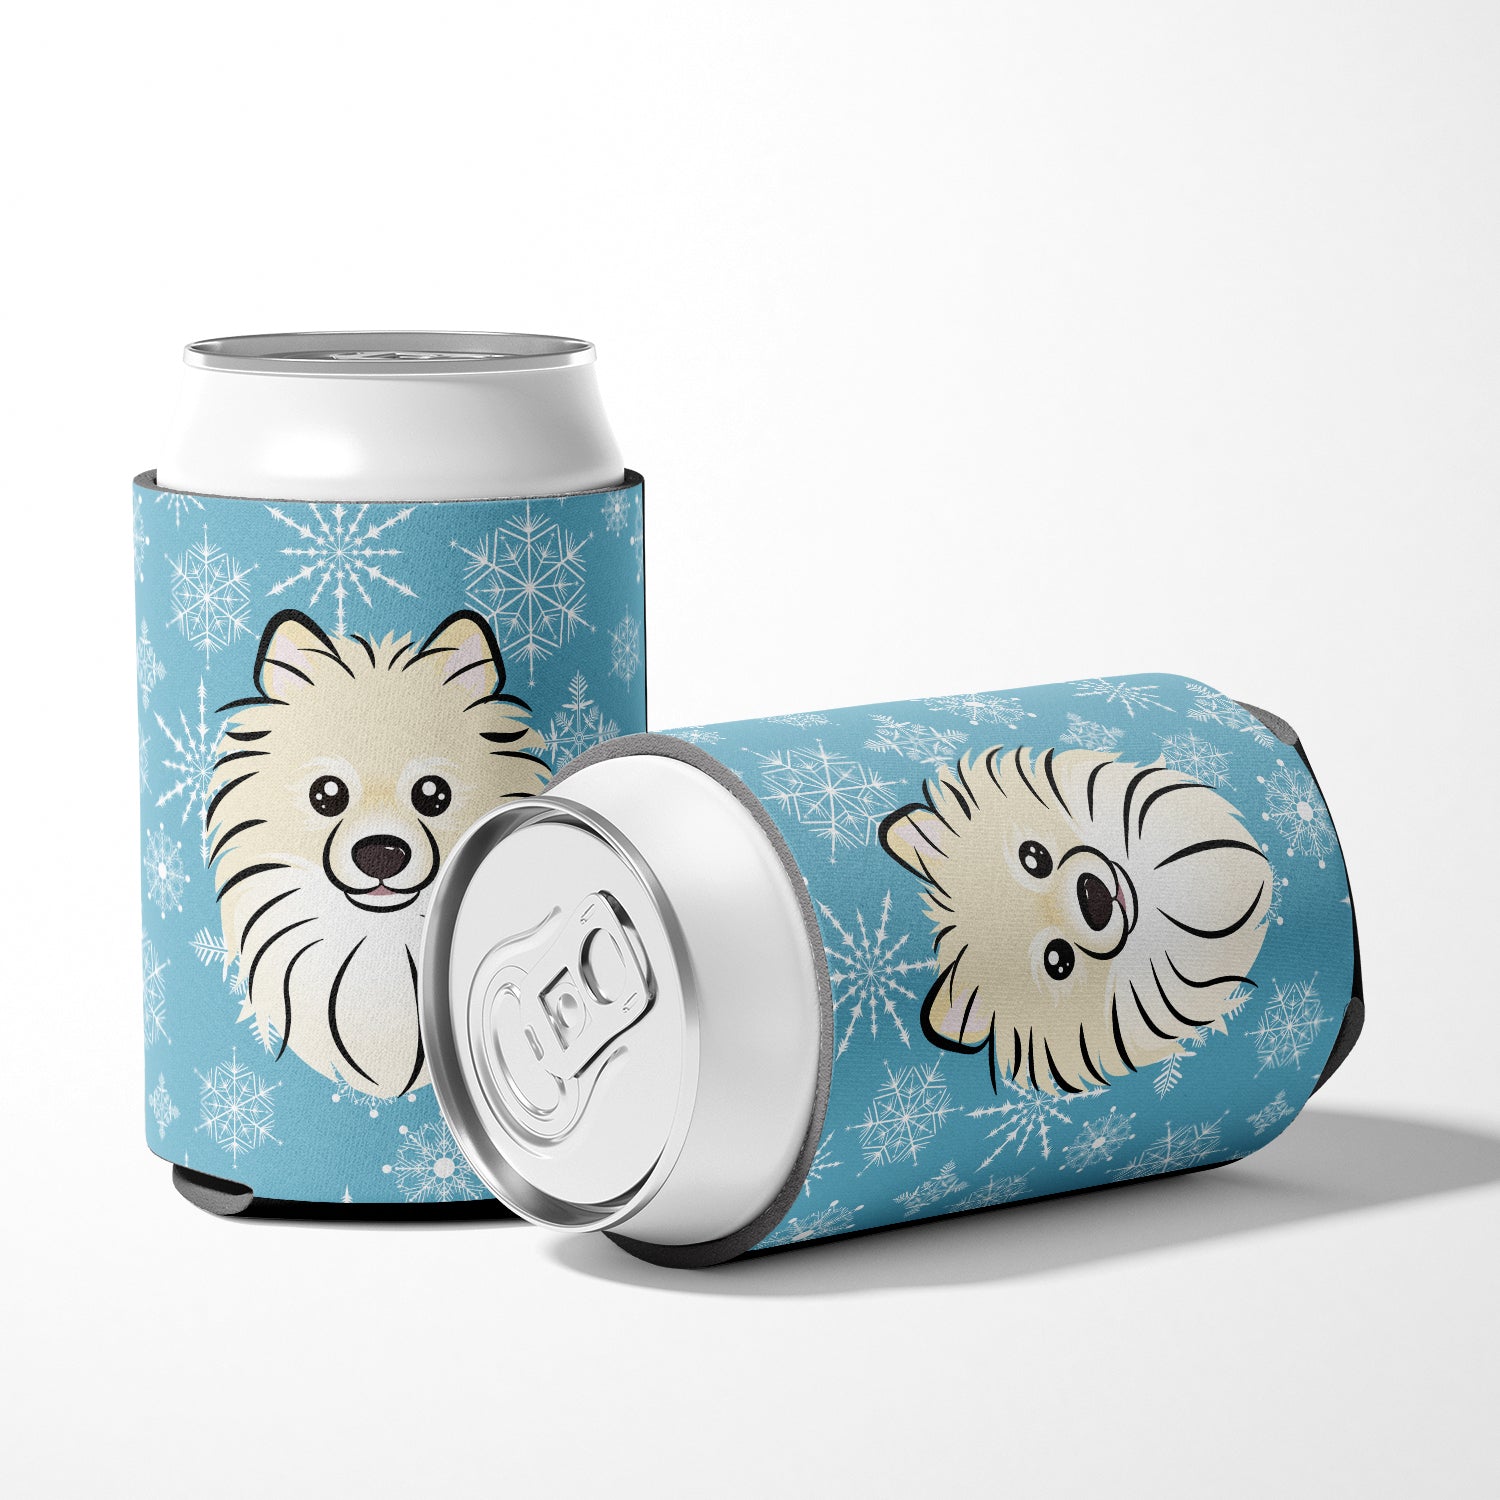 Snowflake Pomeranian Can or Bottle Hugger BB1641CC.